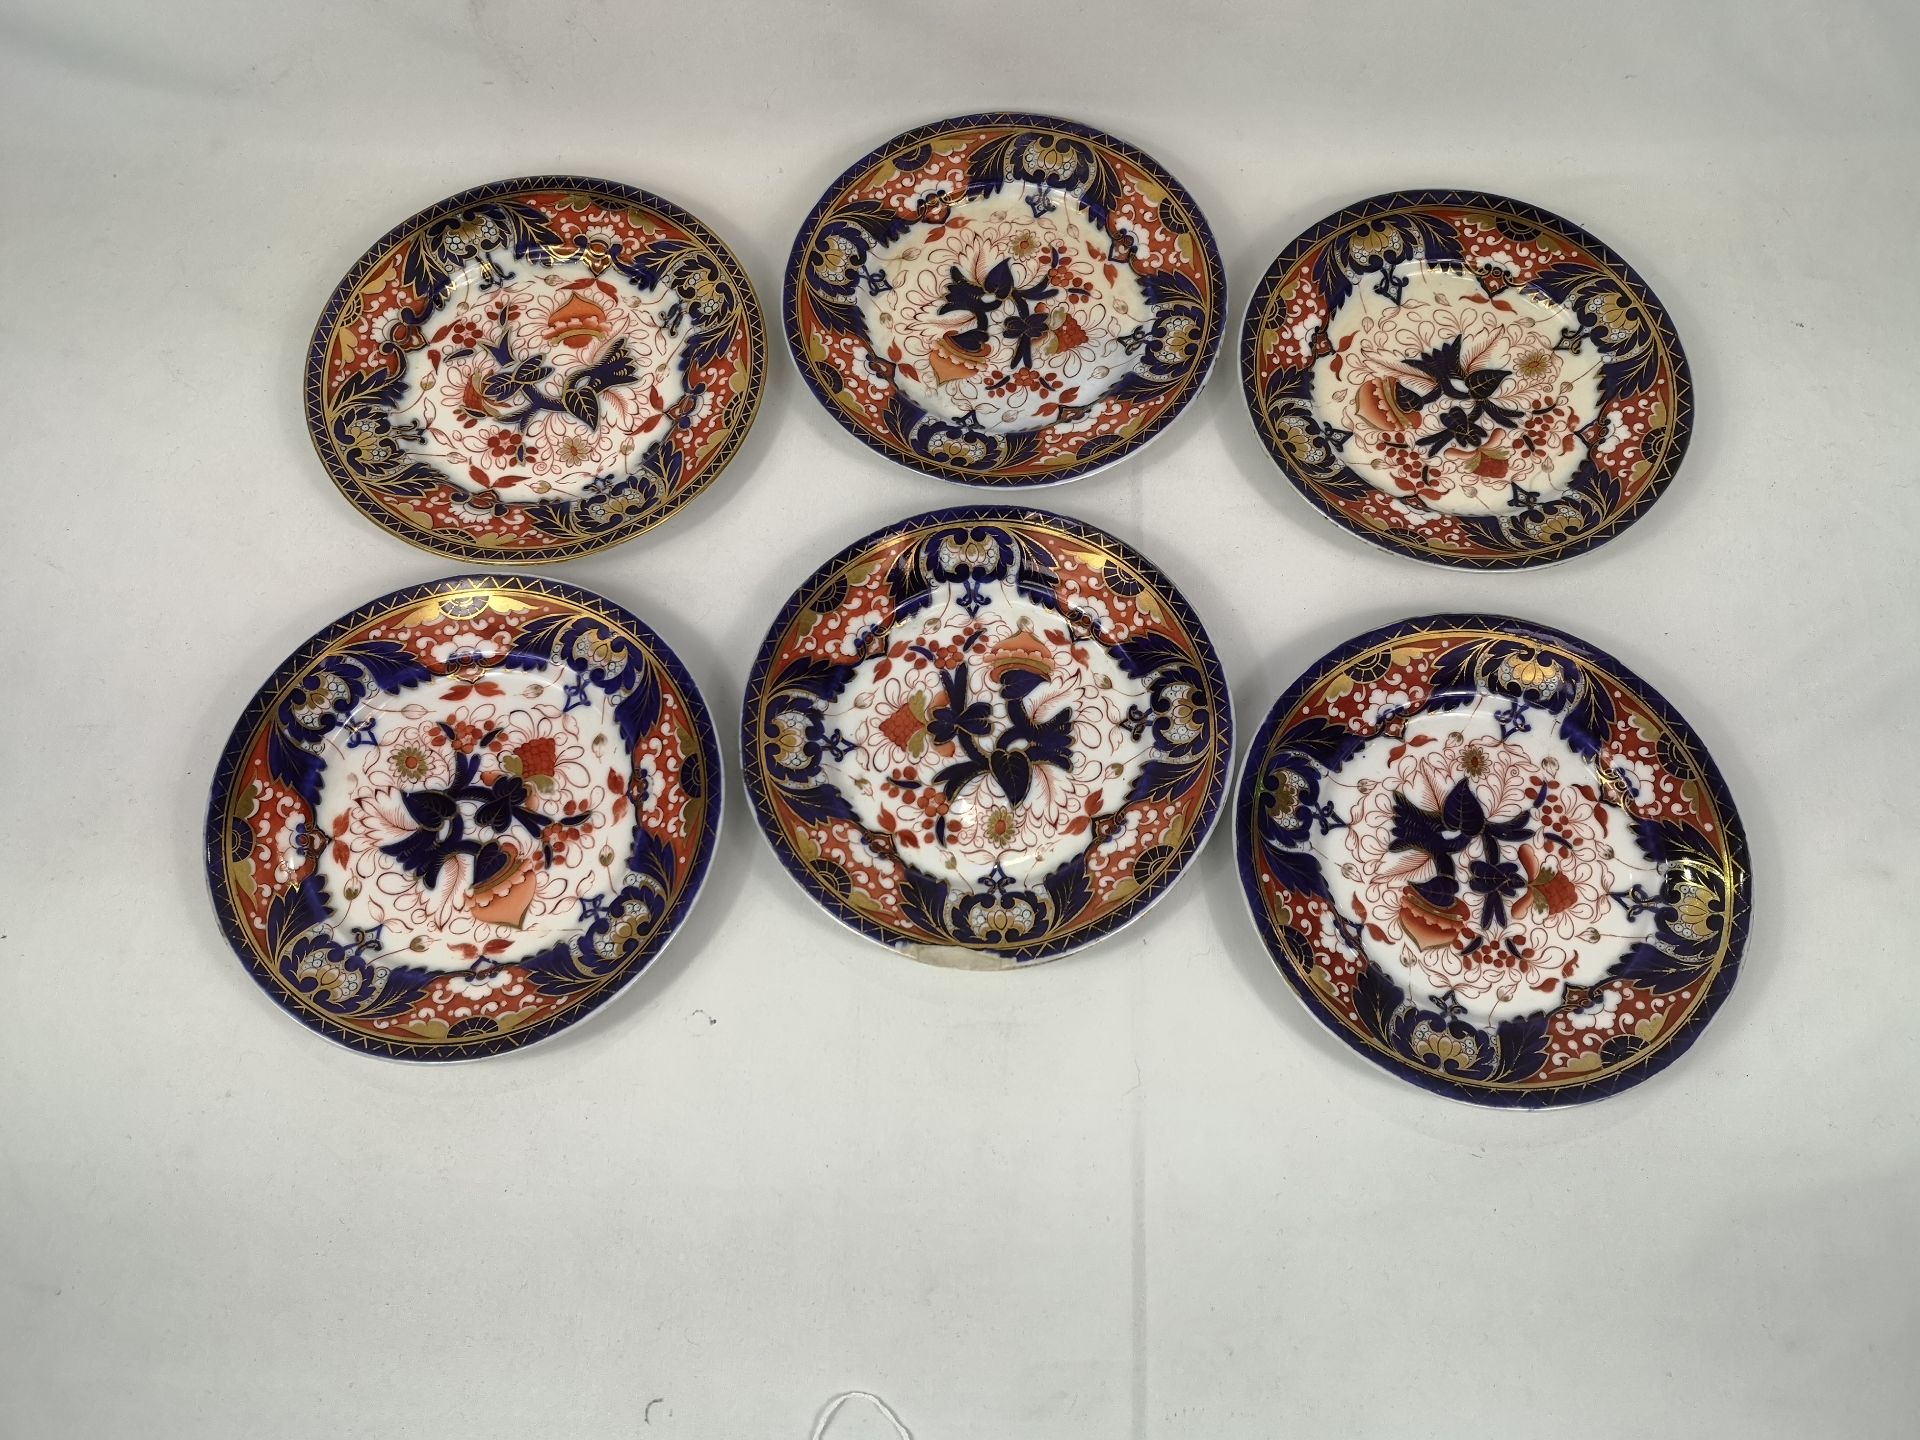 Six decorative plates with gilt highlights